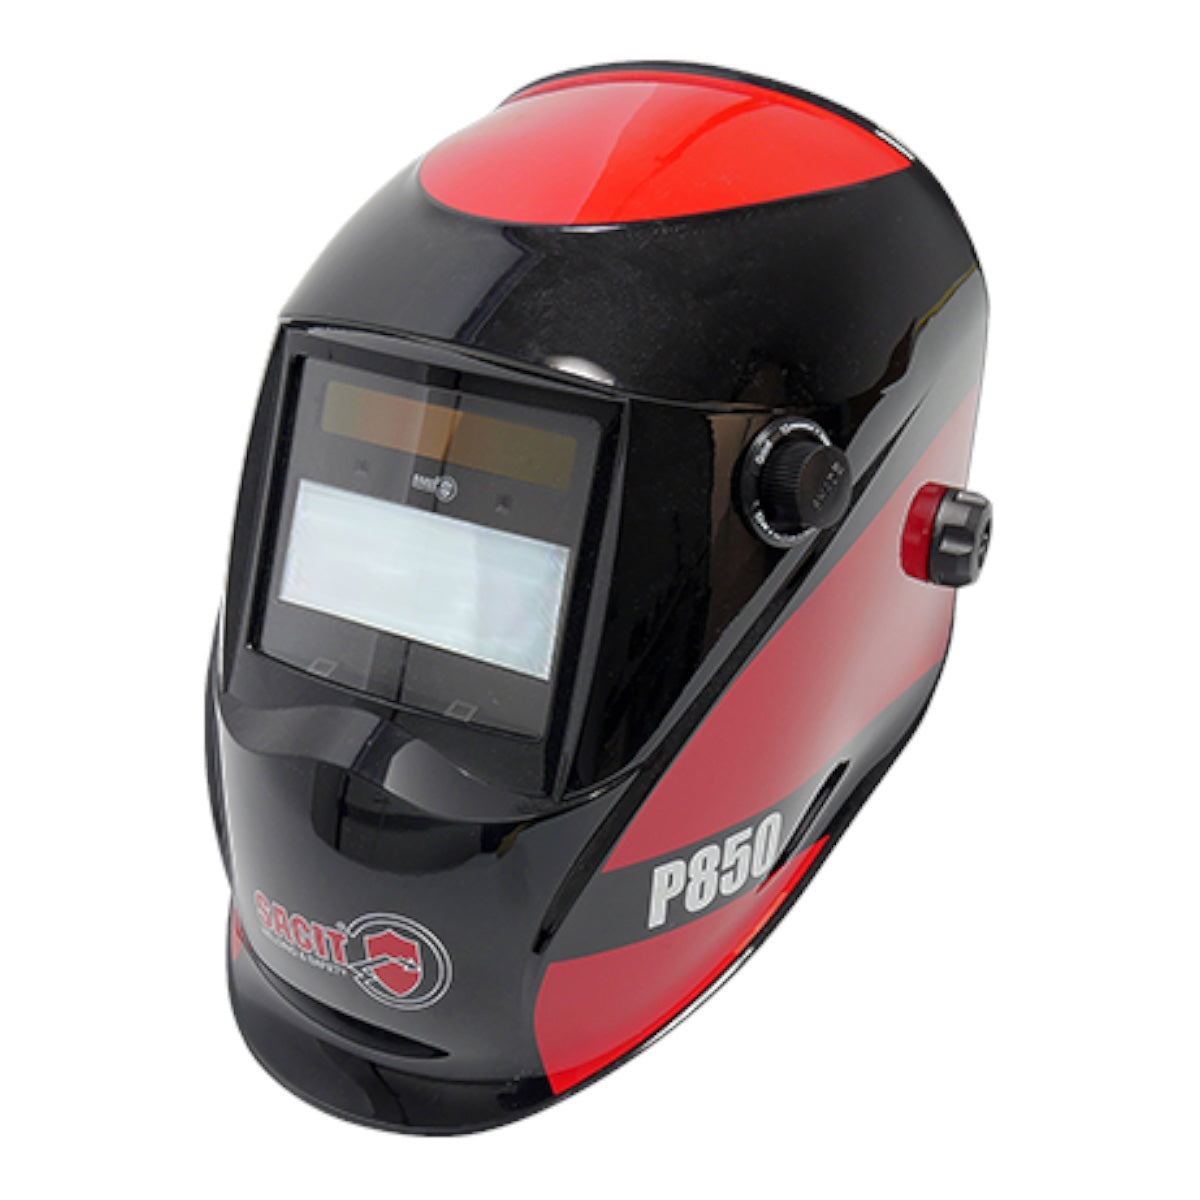 P850 automatic welding helmet